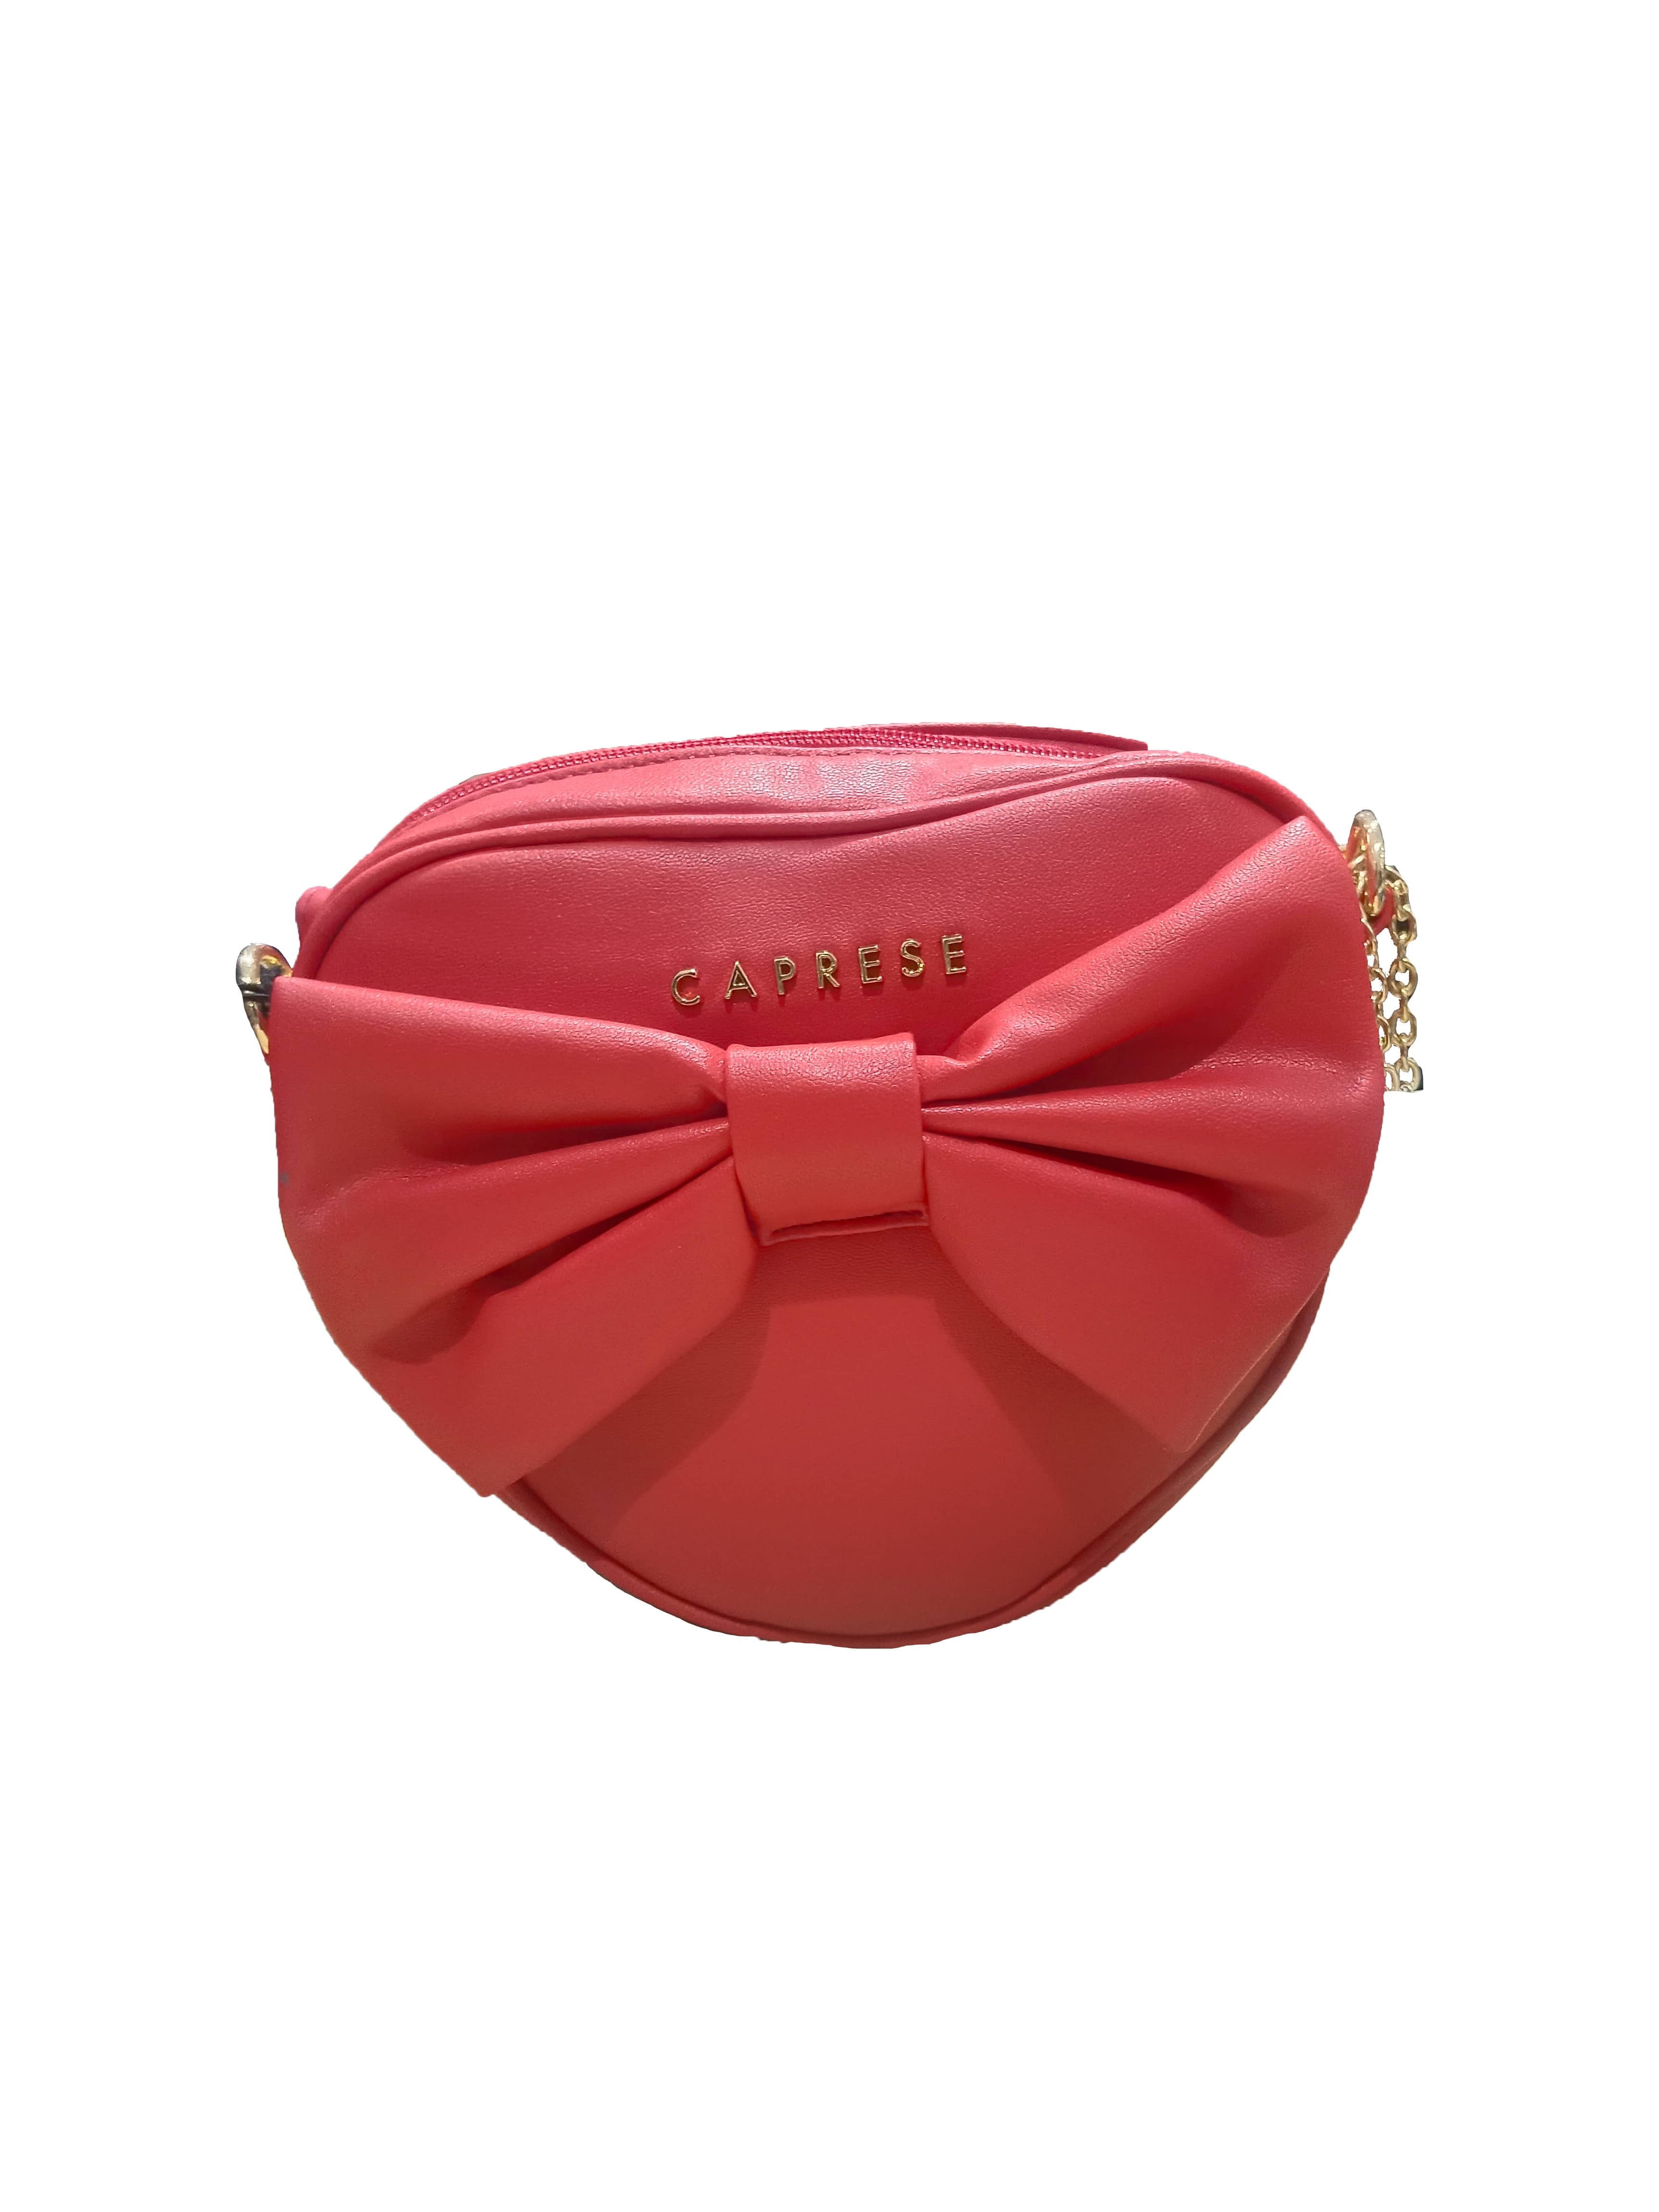 Designer Bags With Straps Crossboday Bag Red Double Chian Tote Bag 453569  Hasp Up Shouler Handbag High Capacity Interior Zipper Pocket Womens Fashion  Storage From Luxuryhandbag8, $134.72 | DHgate.Com